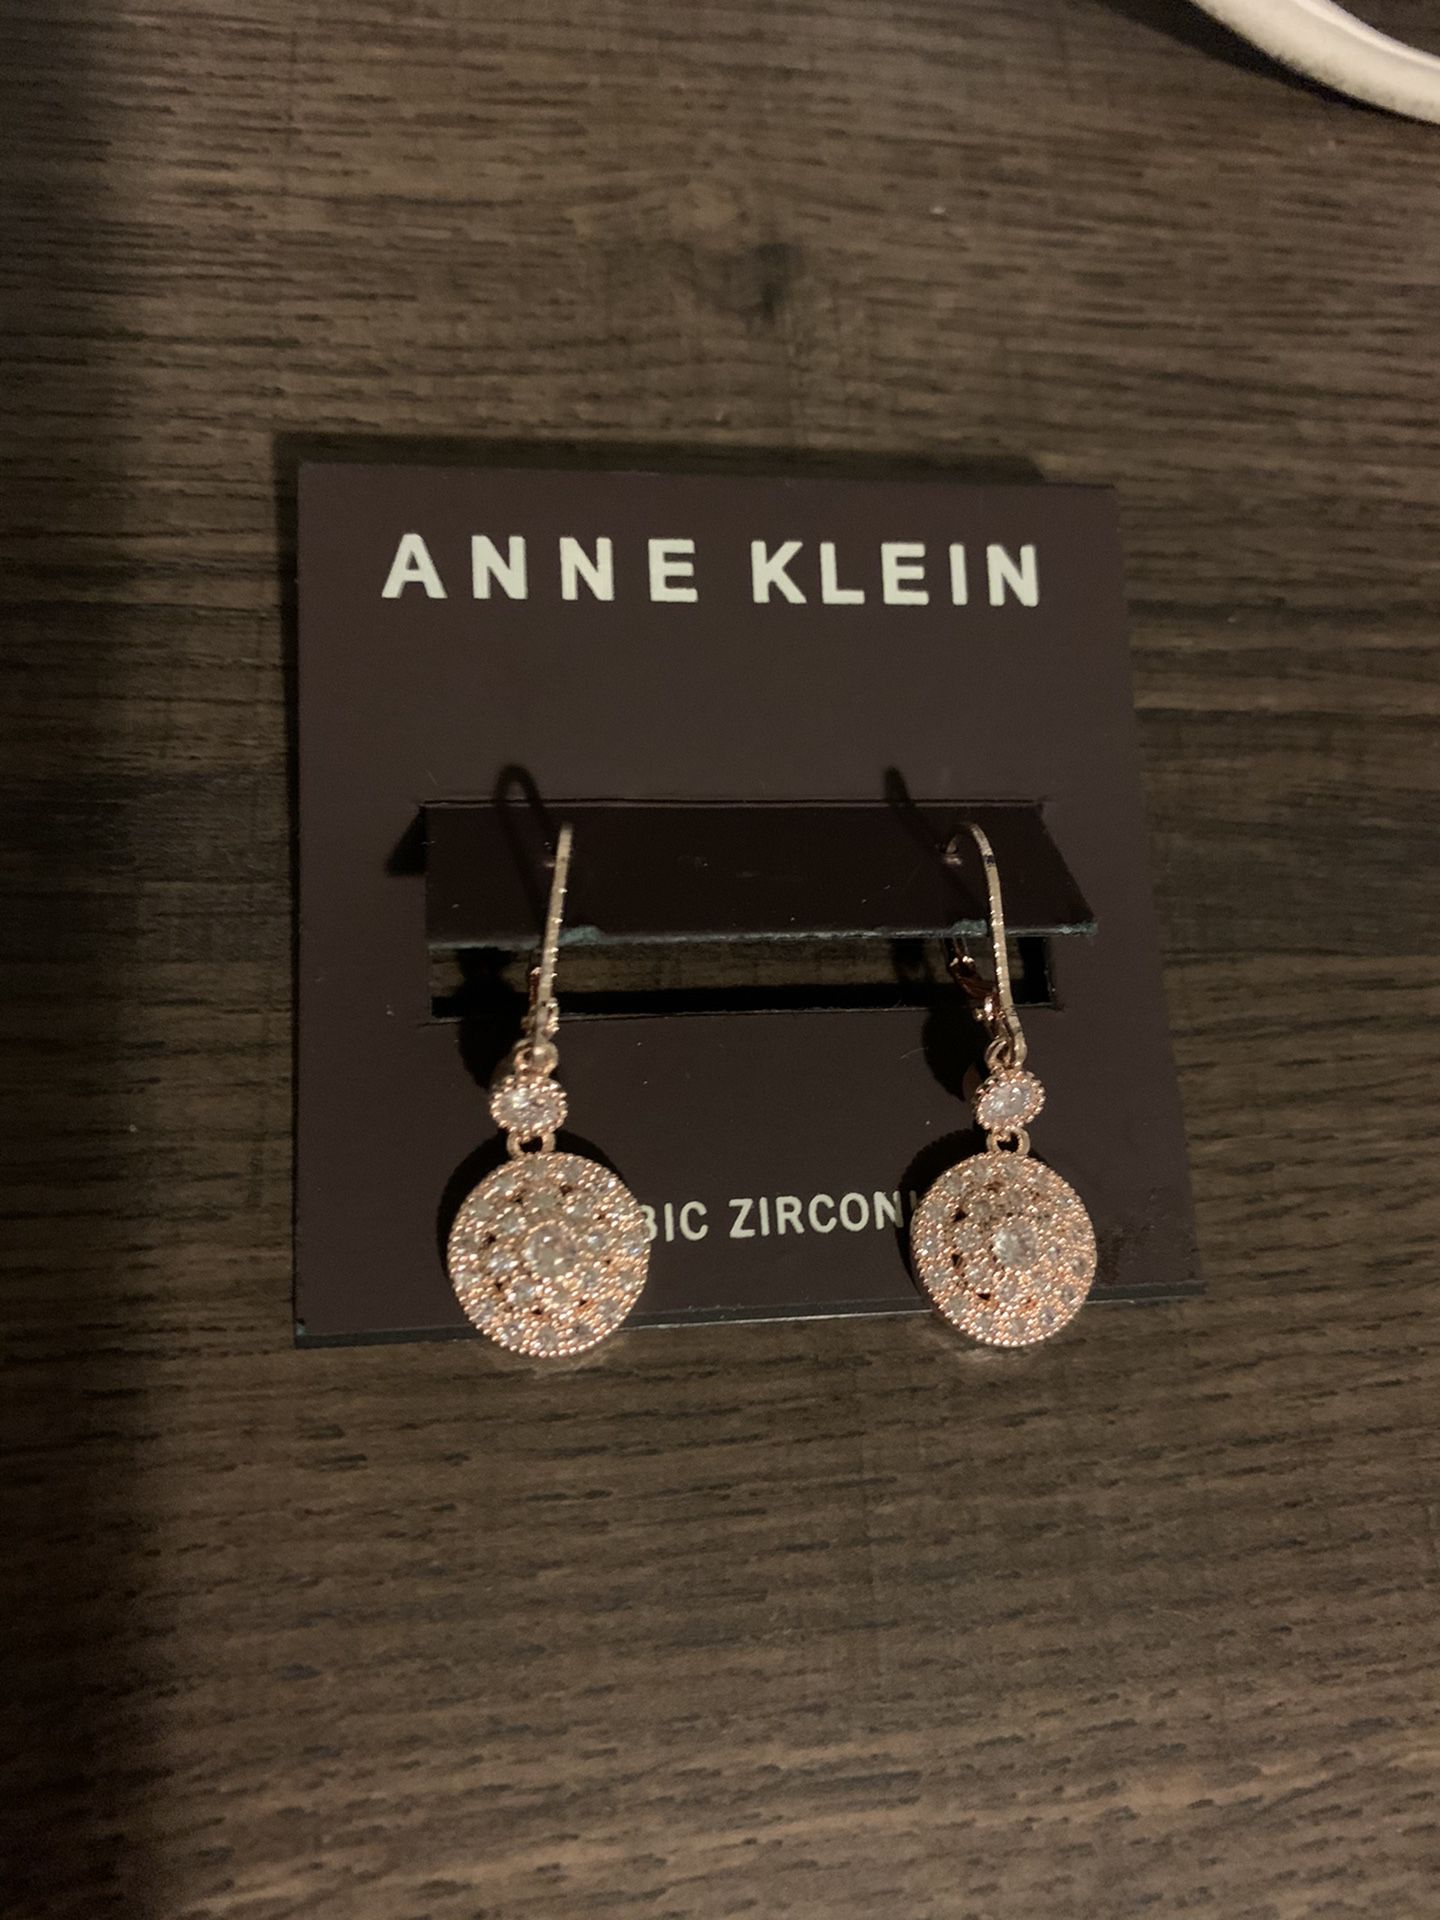 Anne Klein cubic circonia earings